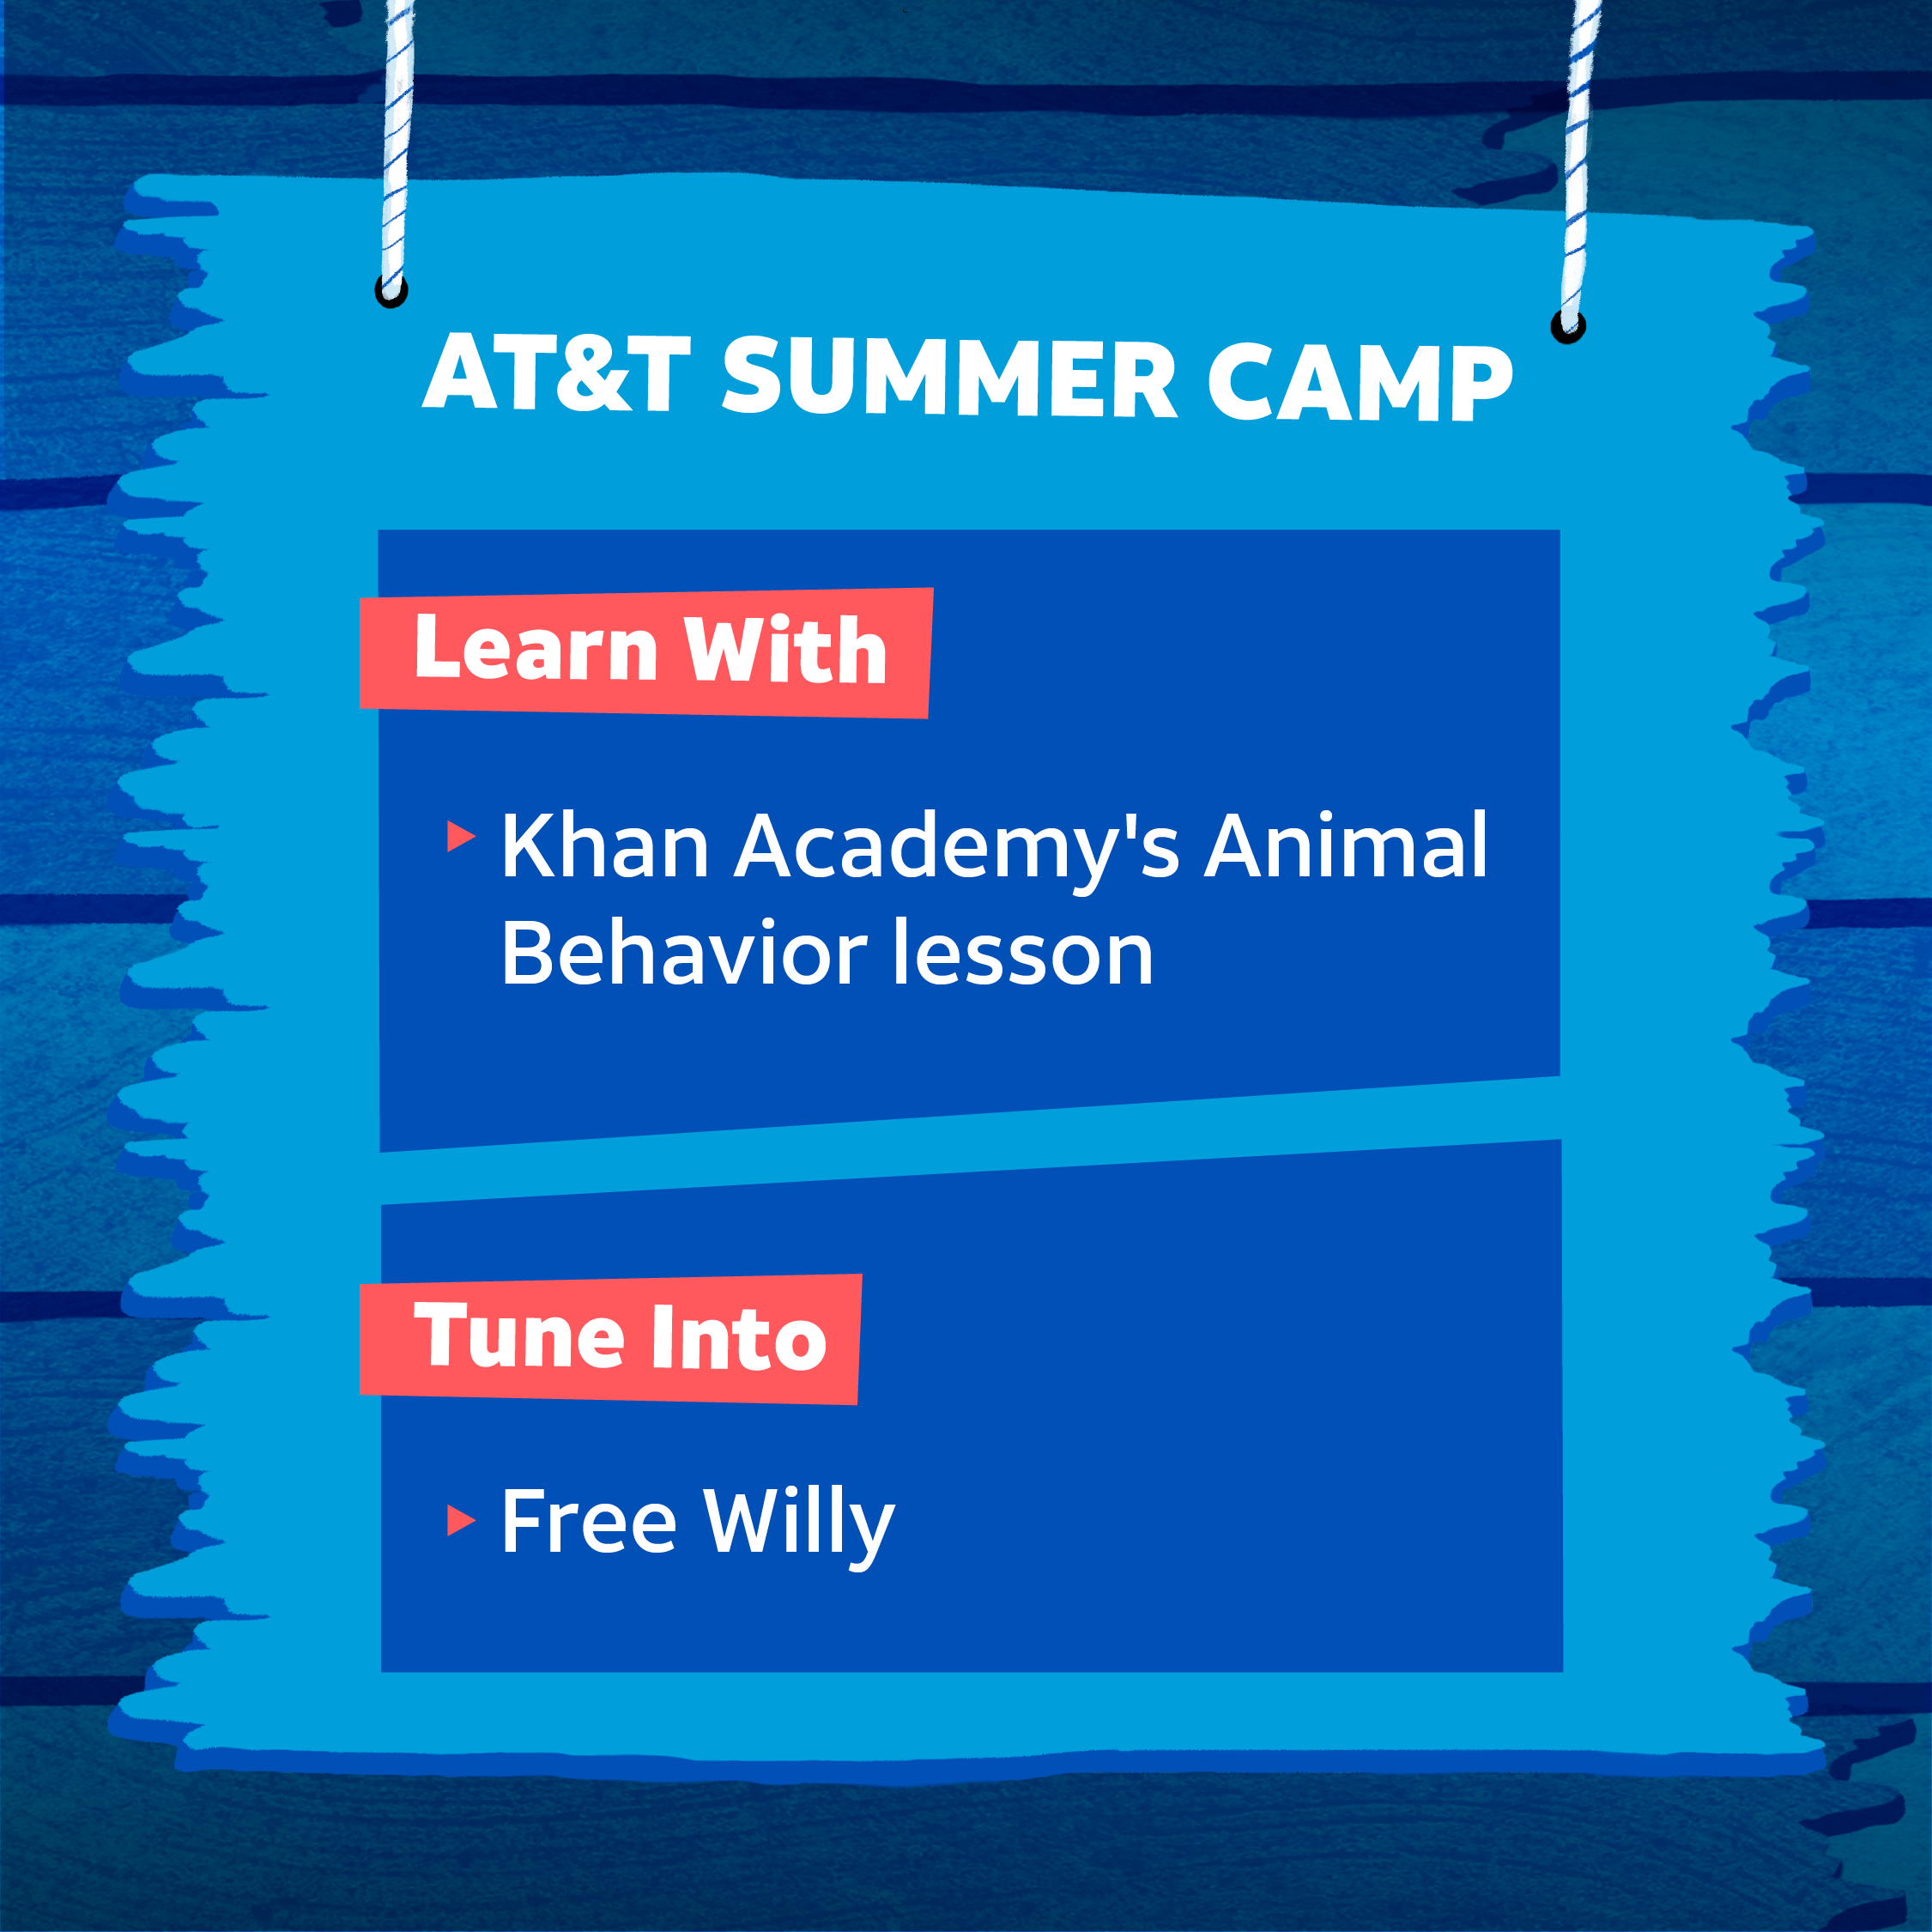 ATT-SummerCamp_v16_Schedule 9.png